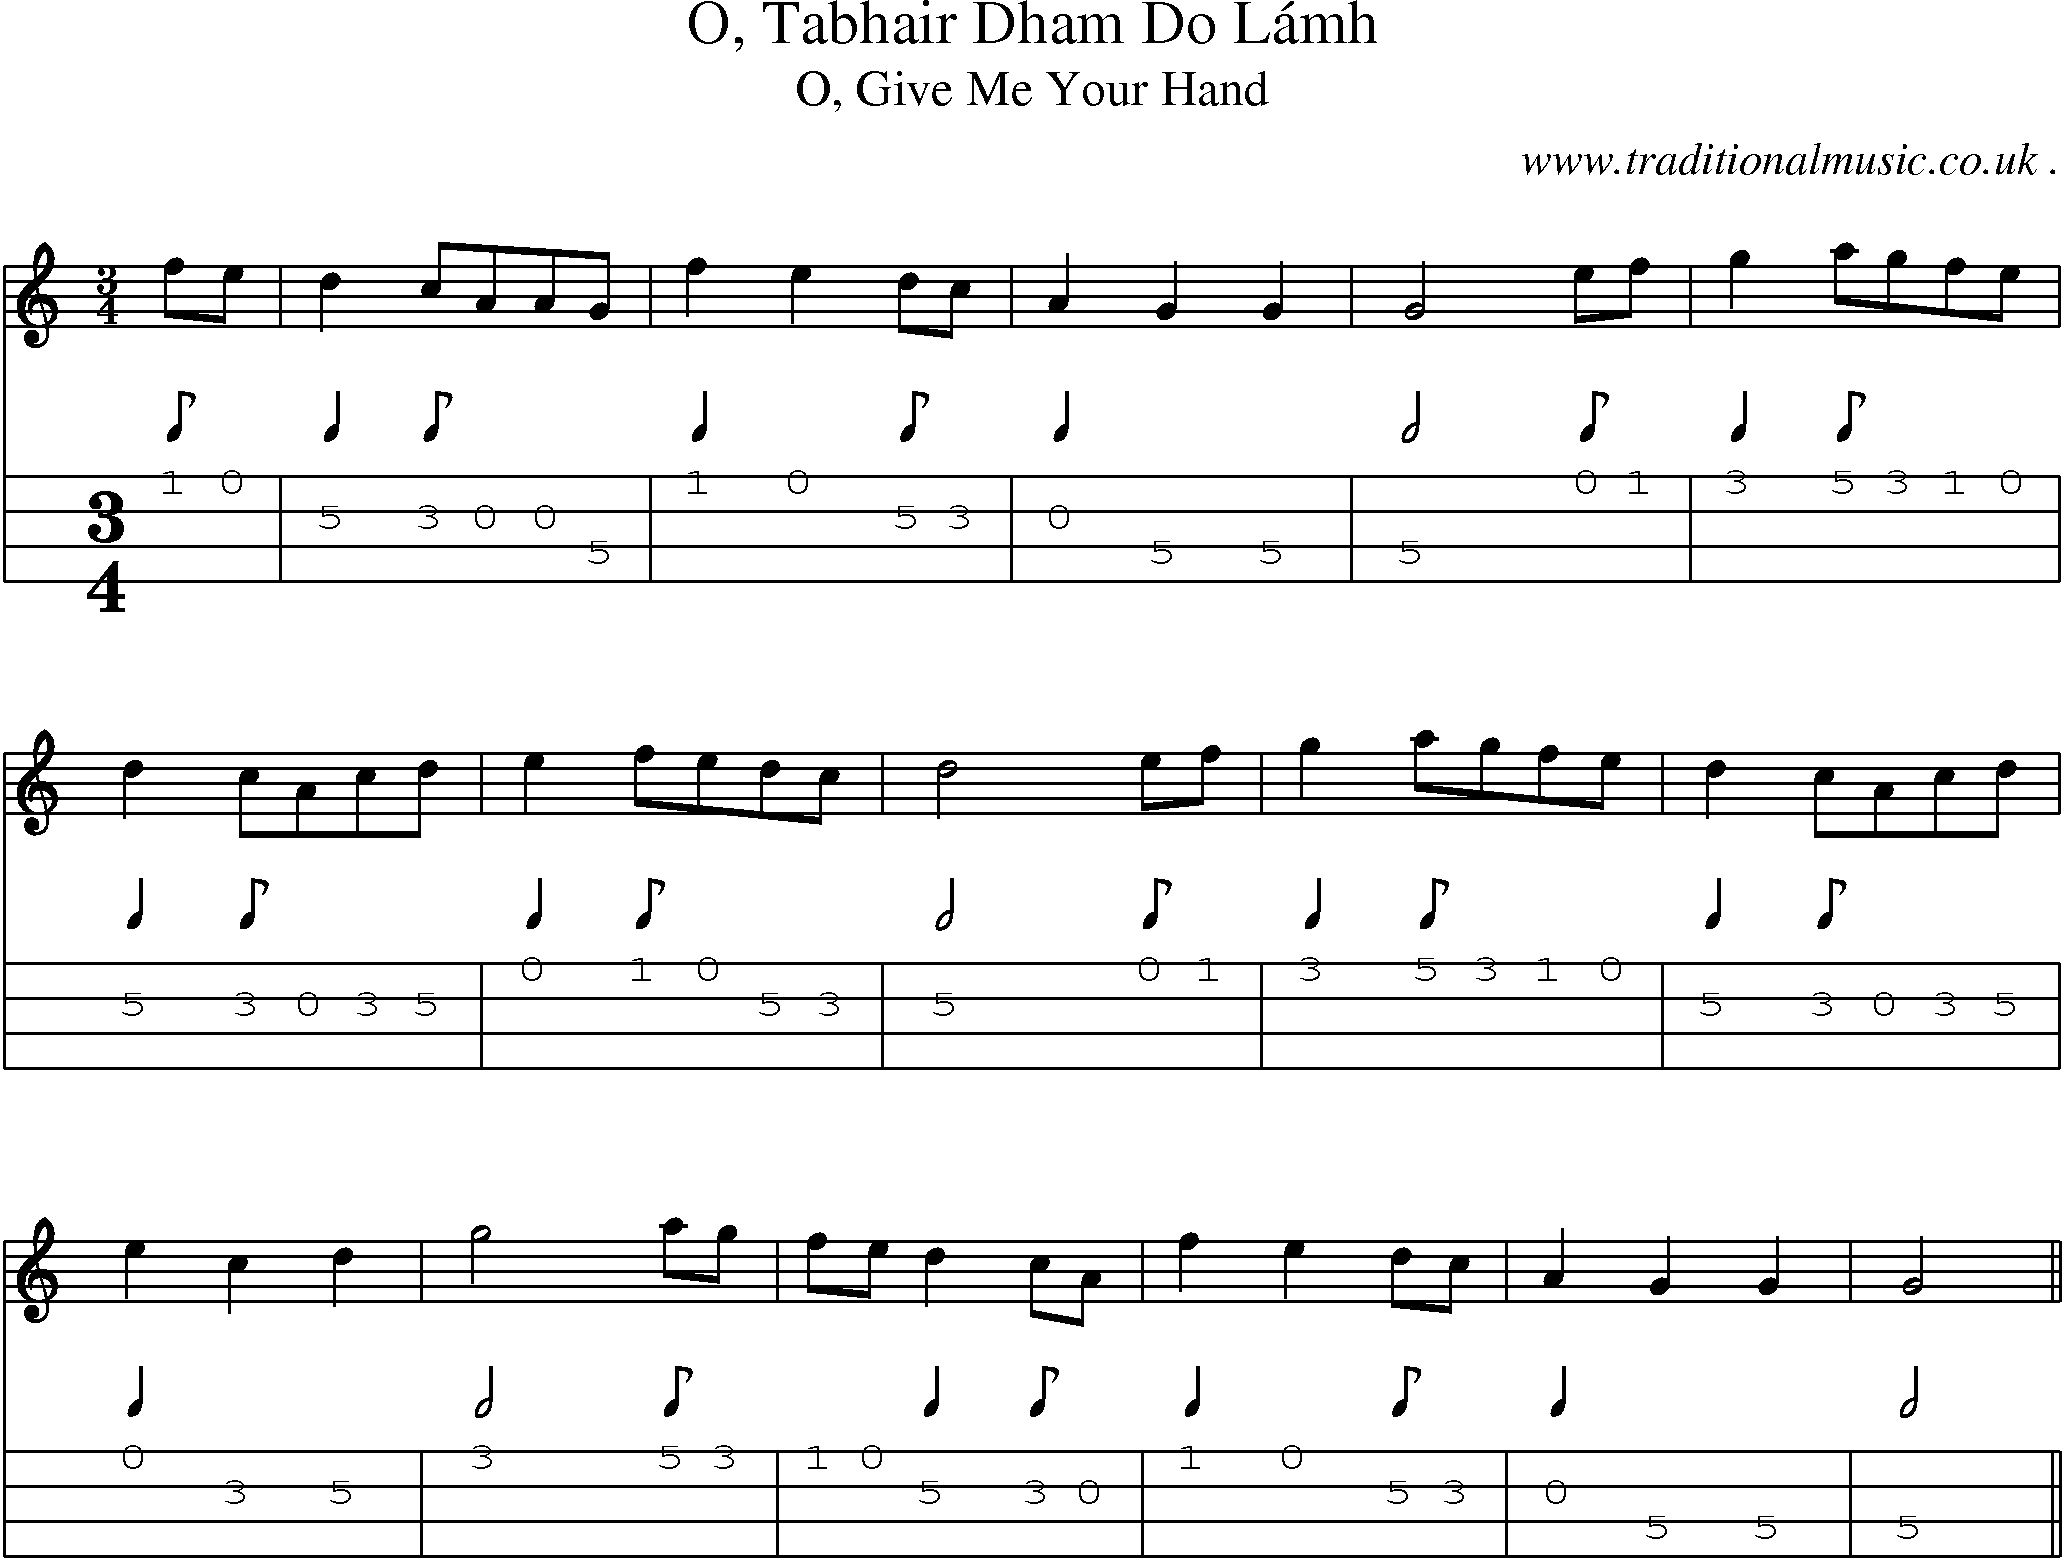 Sheet-Music and Mandolin Tabs for O Tabhair Dham Do Lamh